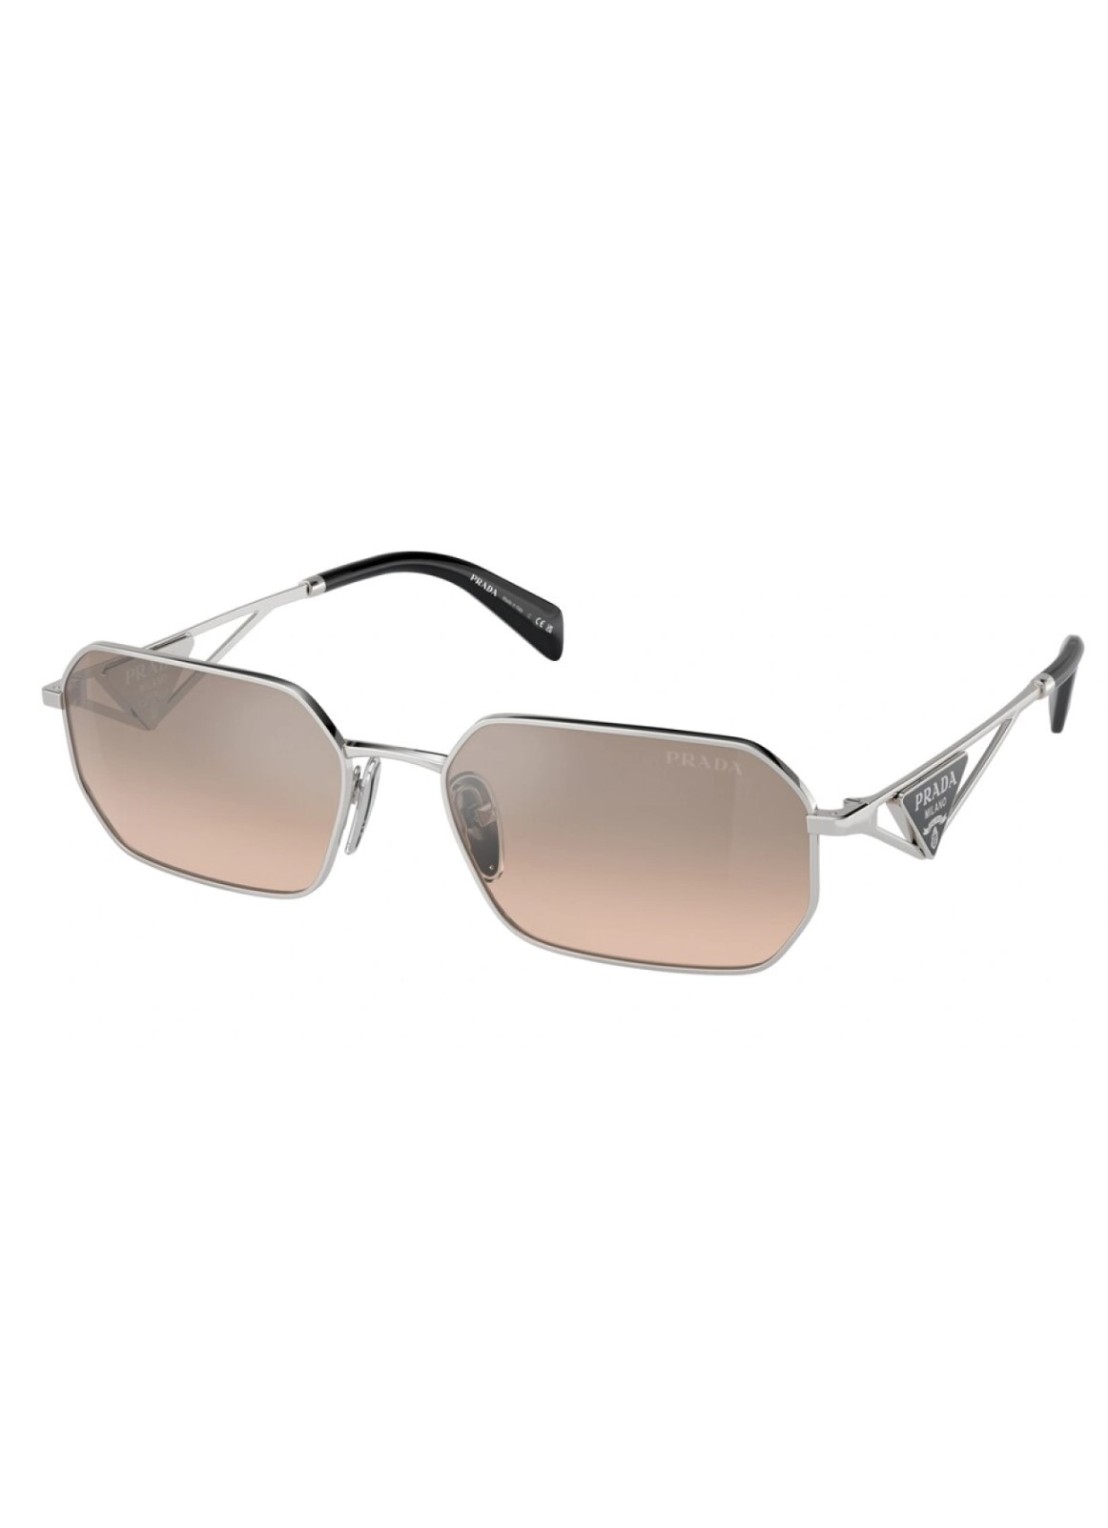 Gafas prada sunglasses woman 0pra51s 0pra51s 1bc8j1 talla transparente
 